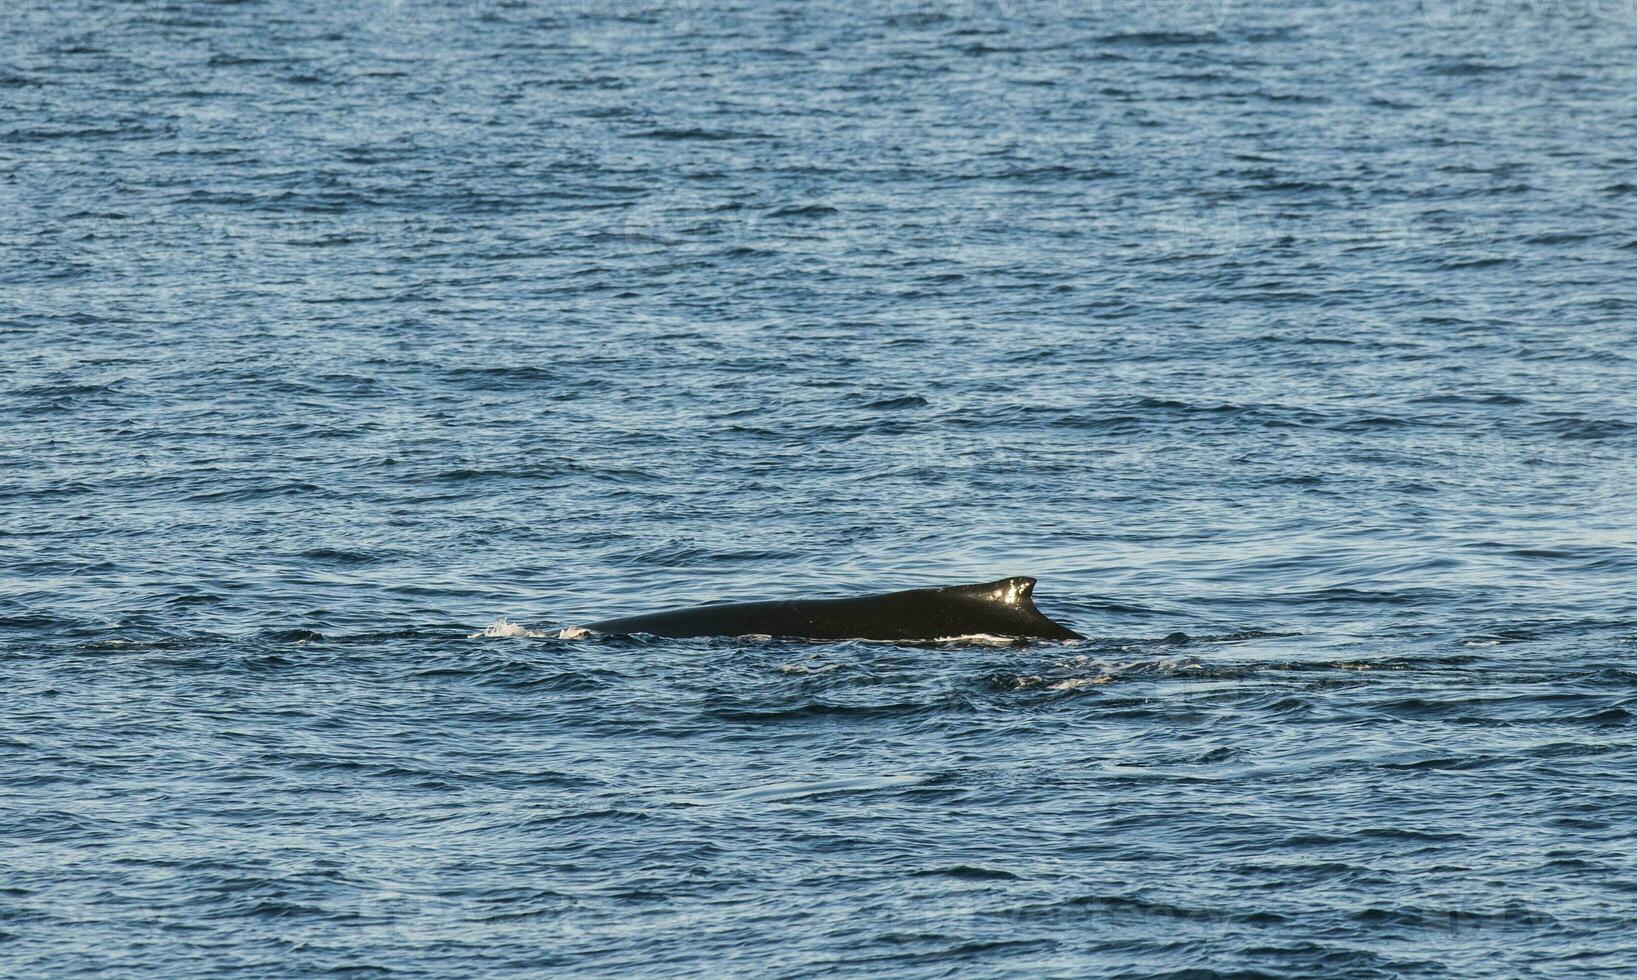 gebochelde walvis duiken, megaptera novaeangliae,antrtica. foto